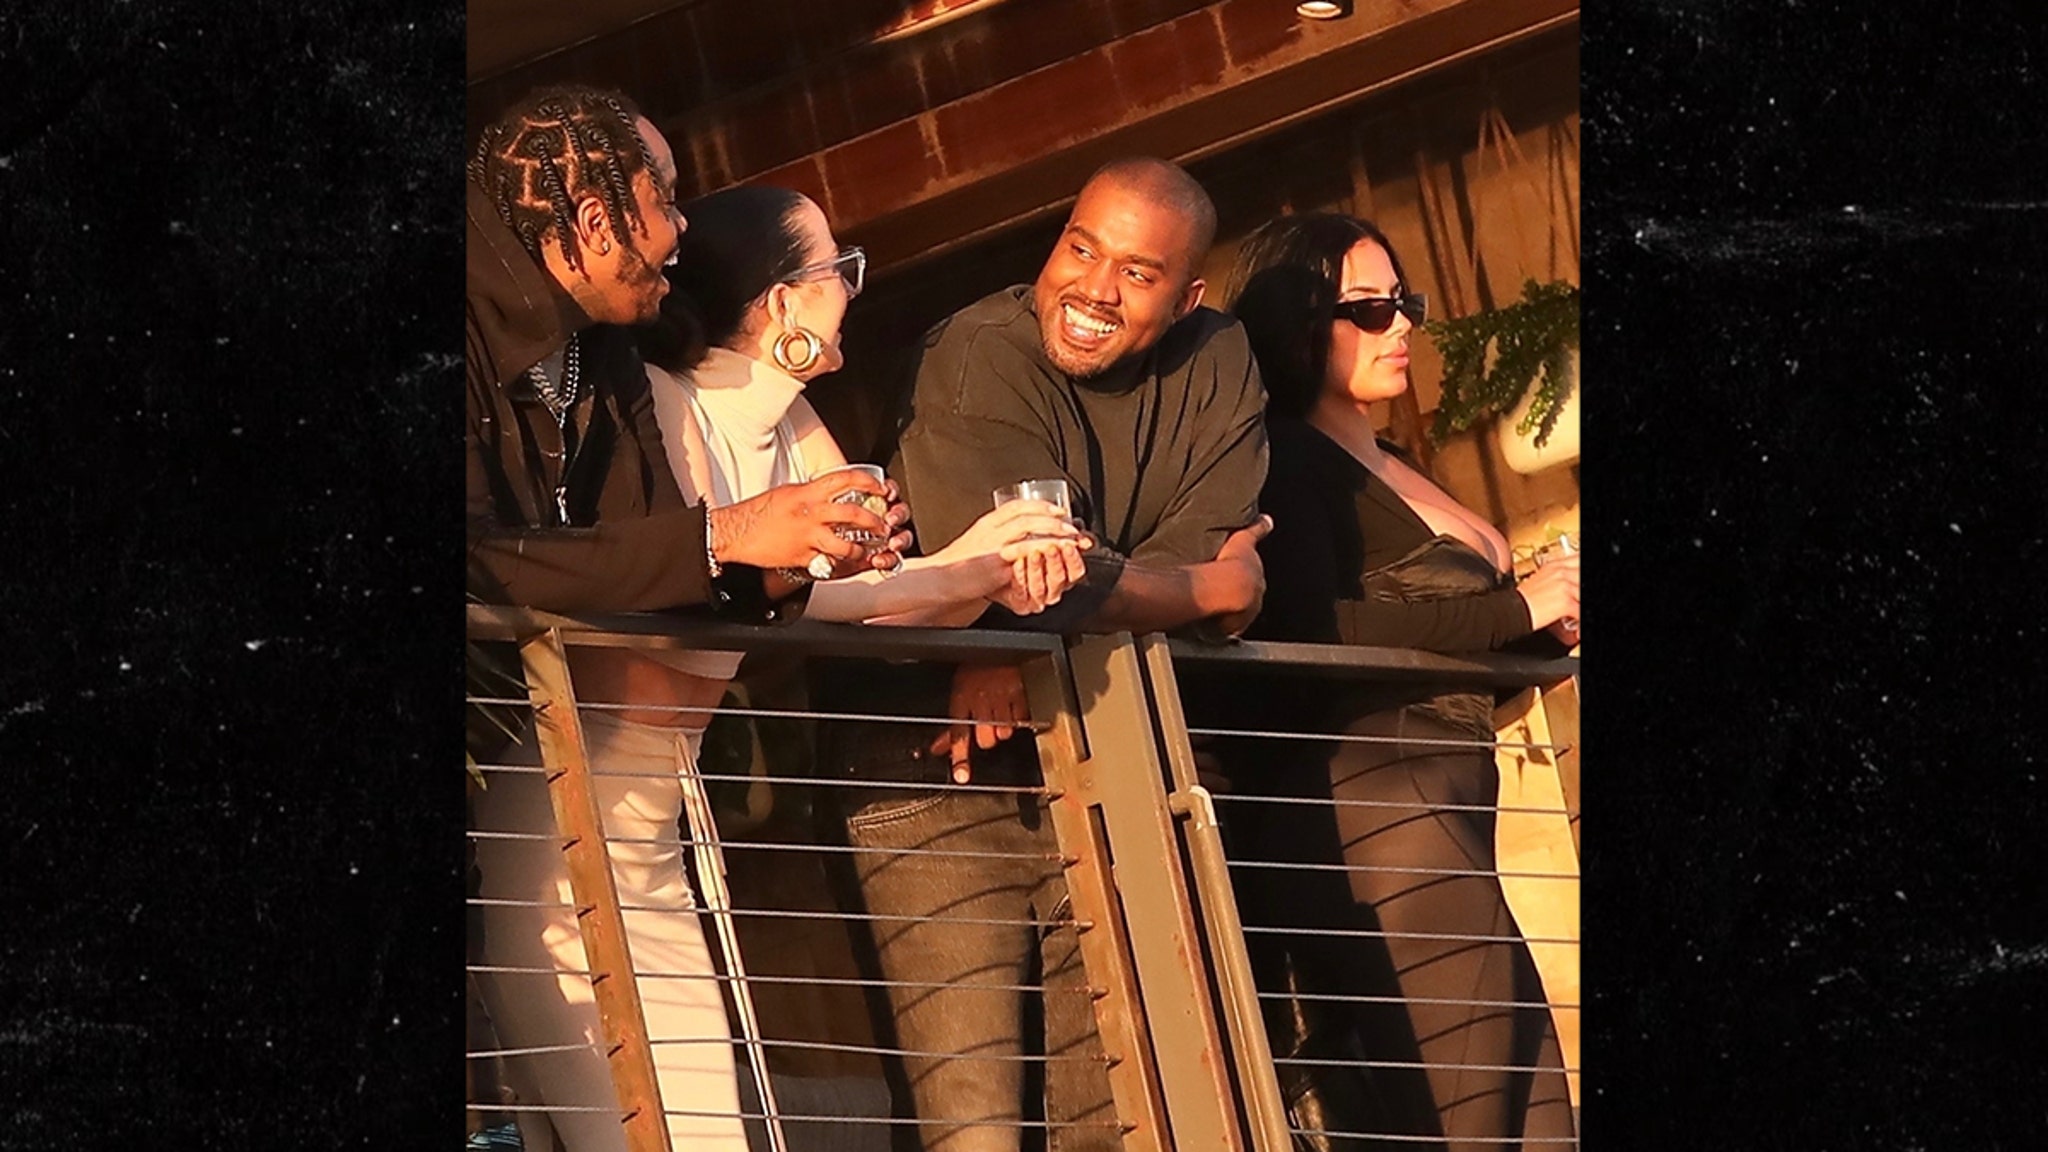 Kanye West Looks Happy Chatting Up Women in Malibu